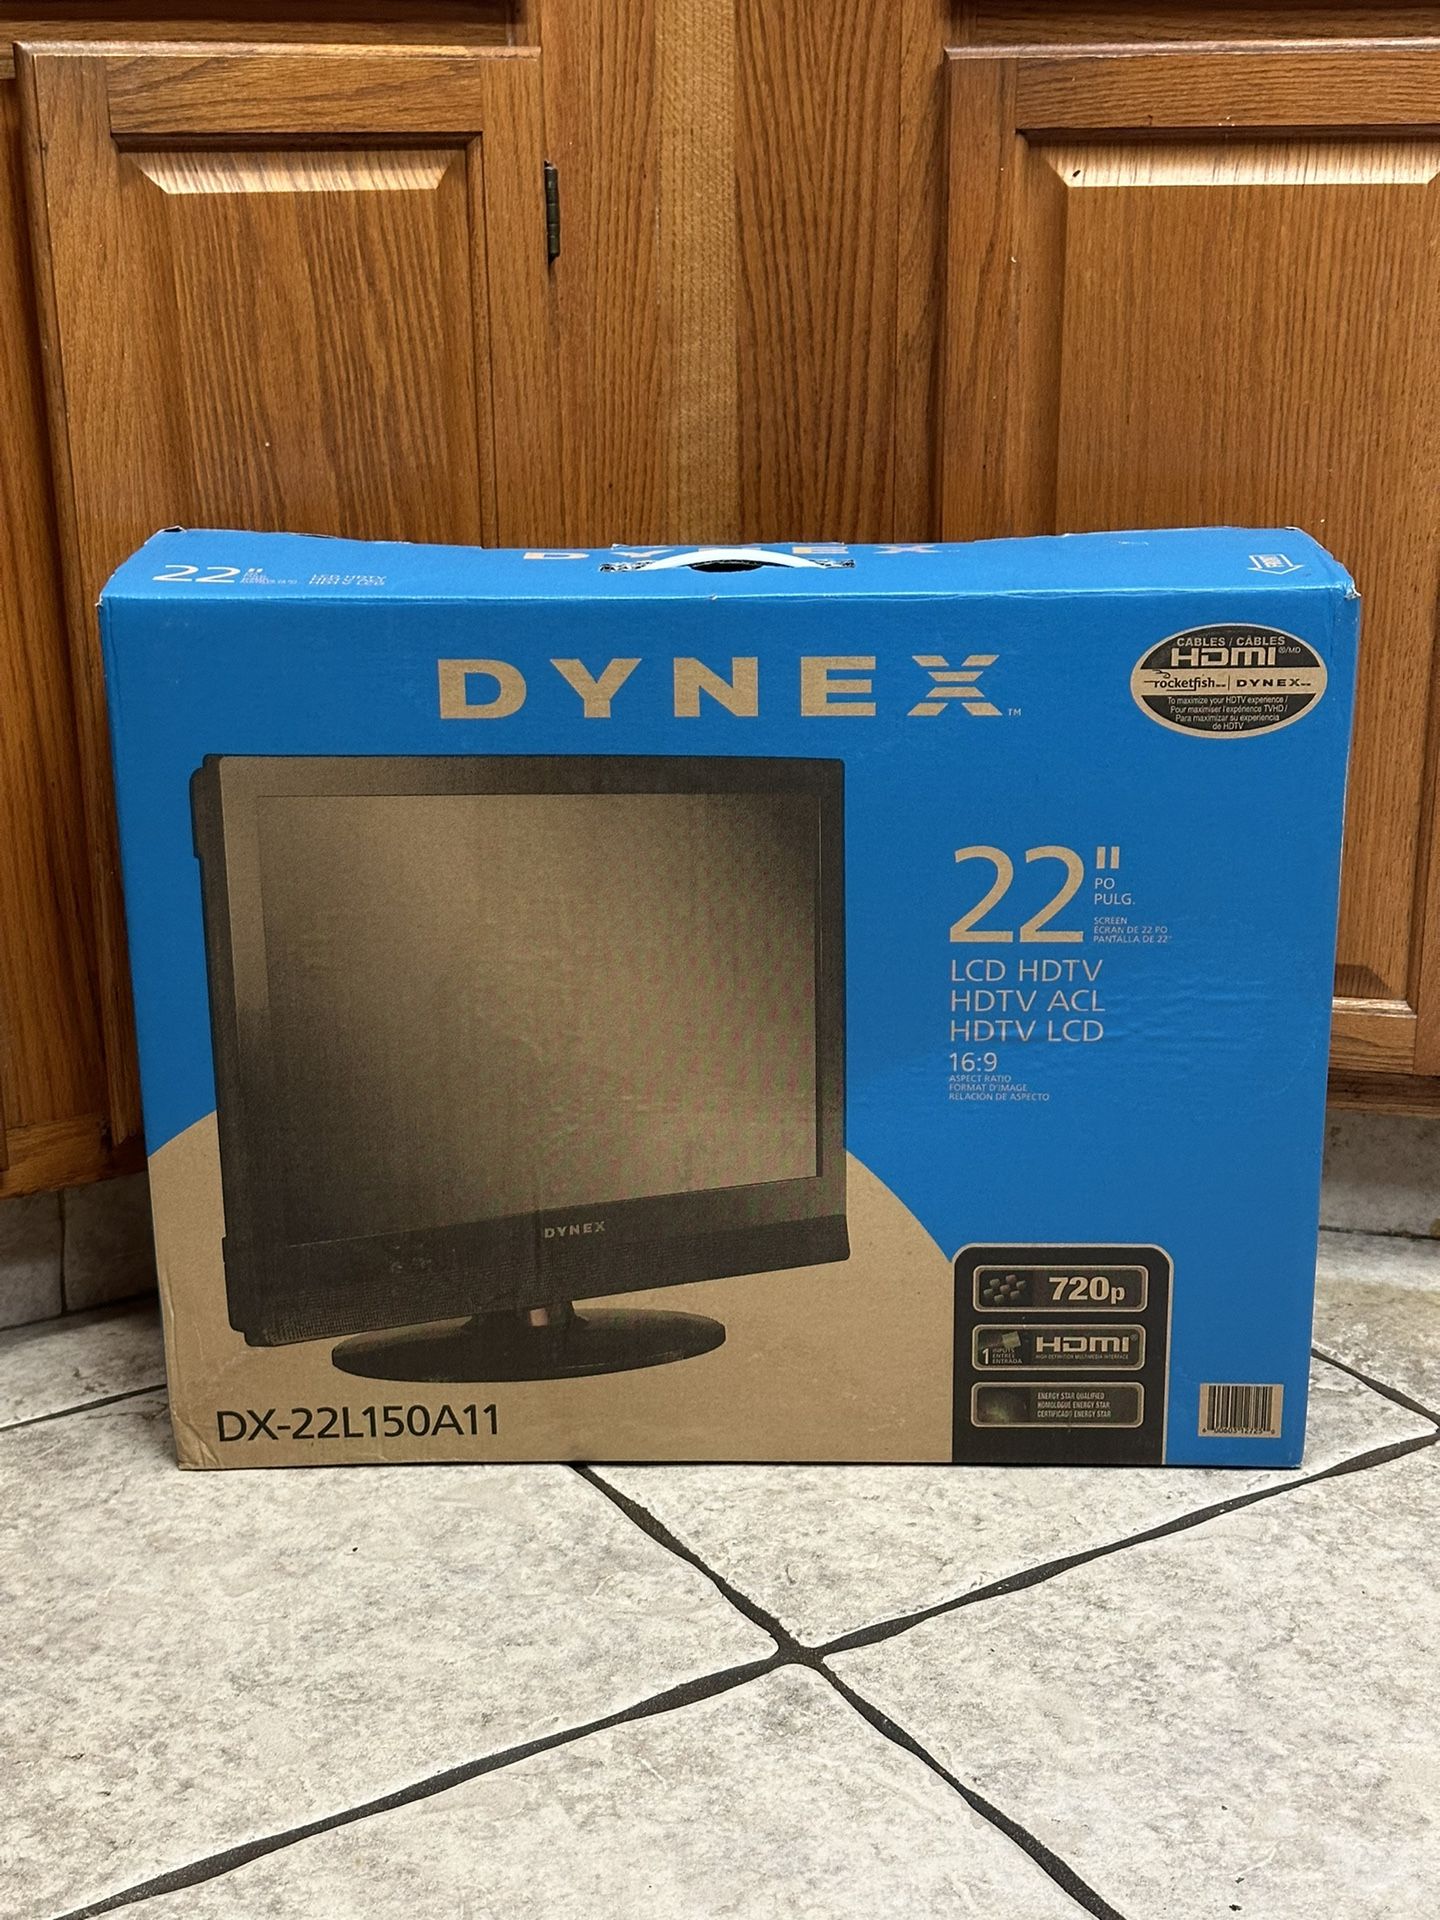 Dynex 22" 720p HD LCD Television